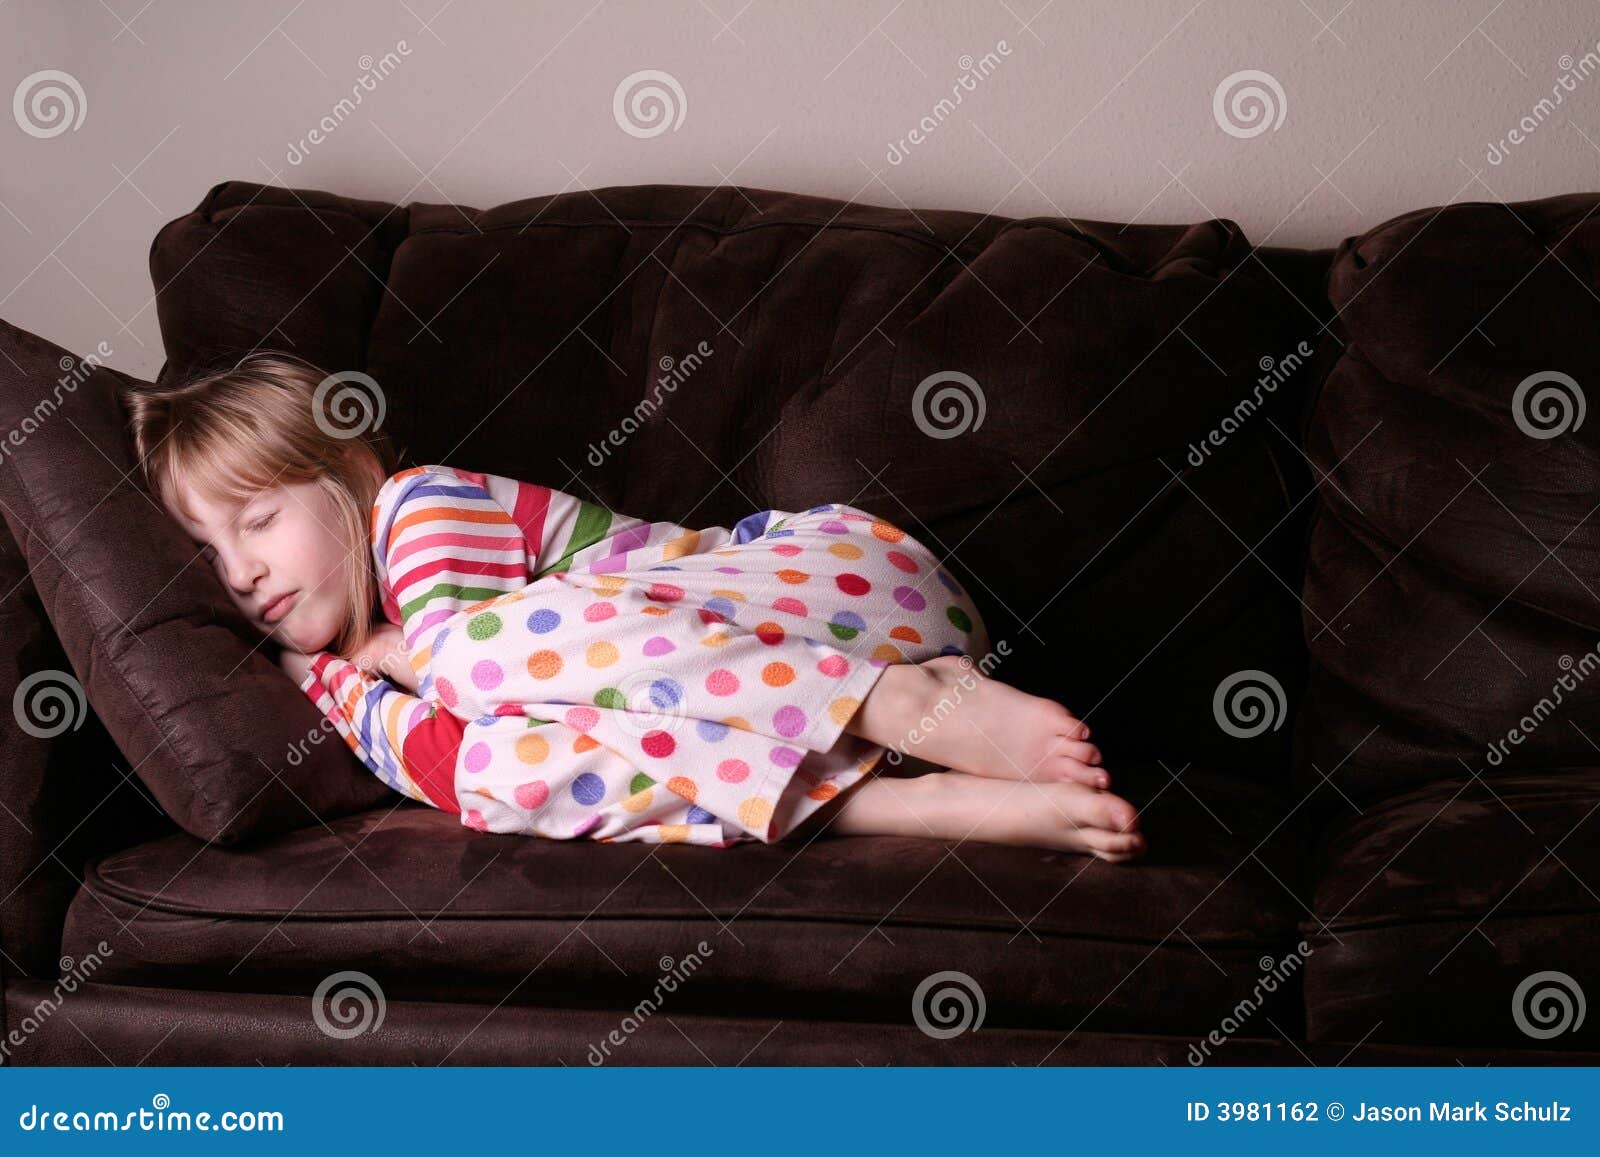 cozy asleep in pajamas on sofa